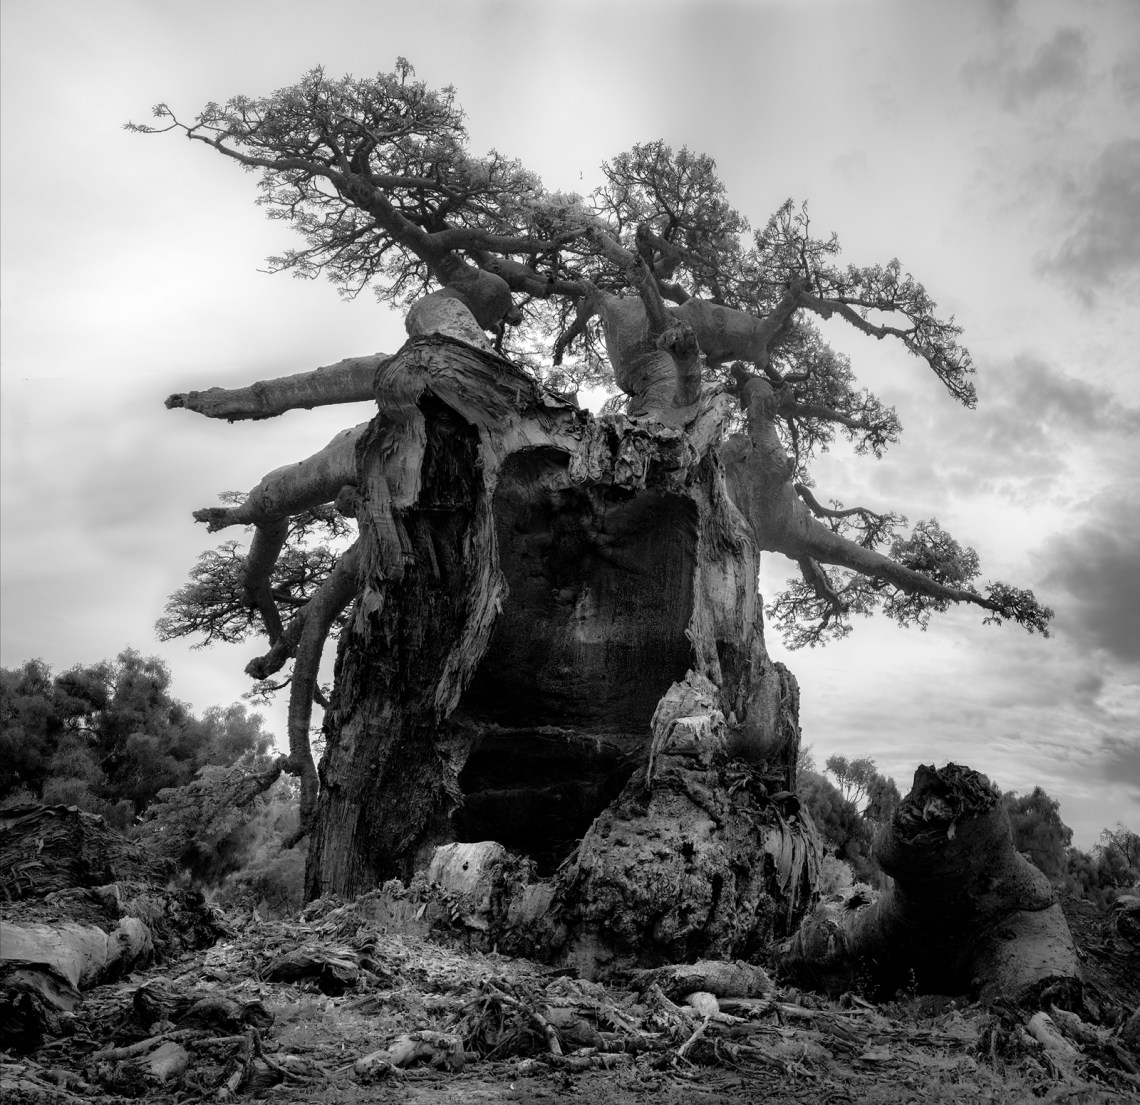 Tsitakakoike, Day; photograph by Beth Moon from her book Baobab